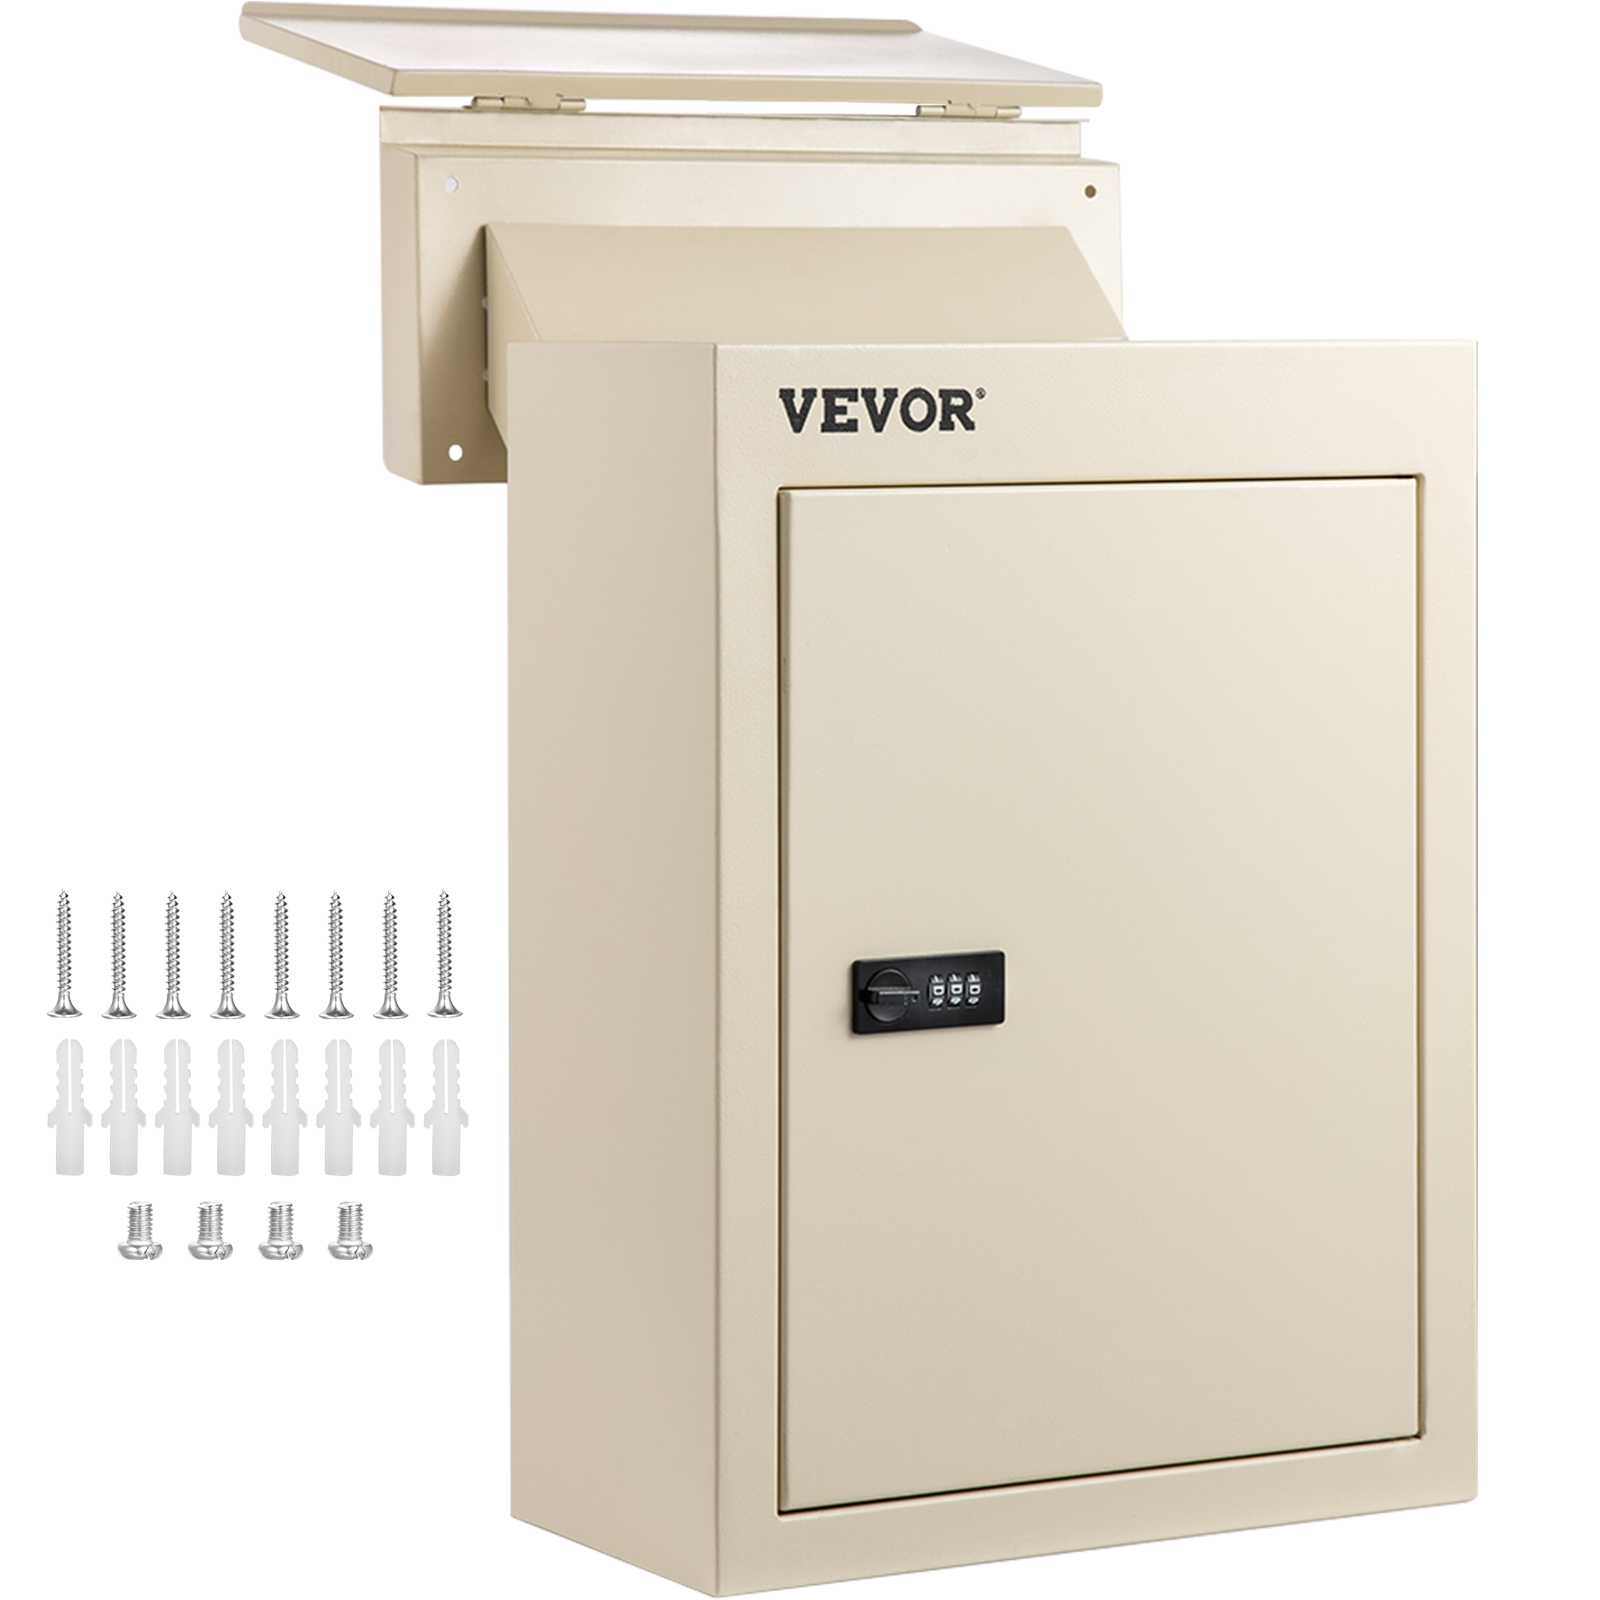 Vevor Through-the-wall Mailbox Letter Drop Box Adjustable Chute Rainproof Beige от Vevor Many GEOs